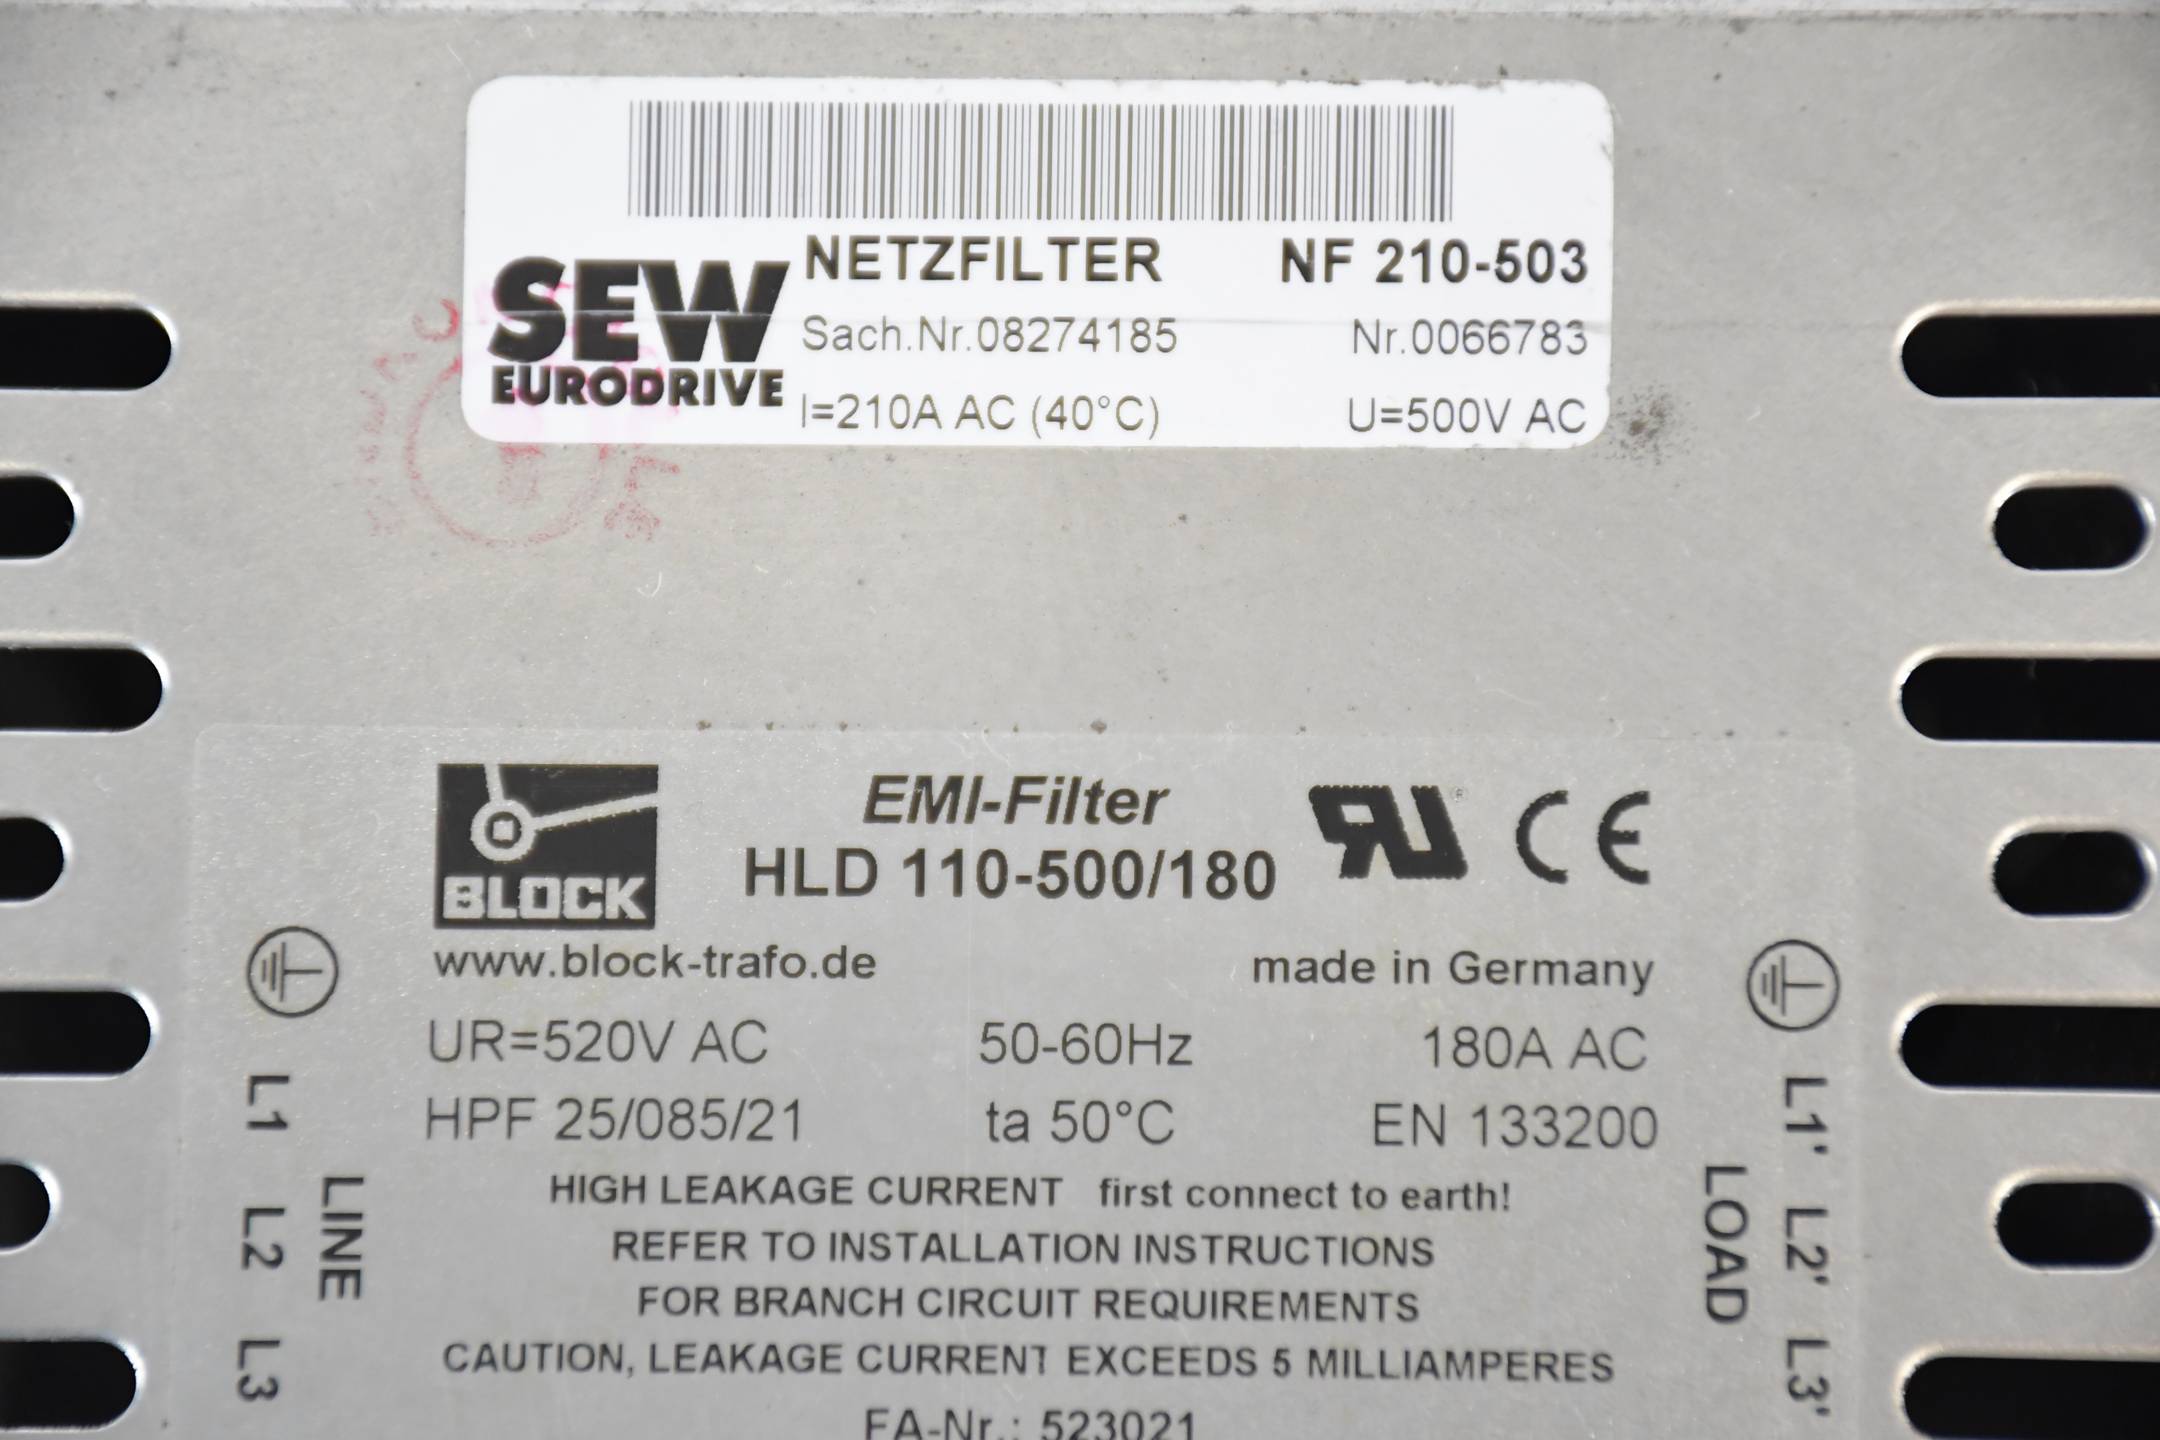 SEW Eurodrive Netzfilter NF 210-503